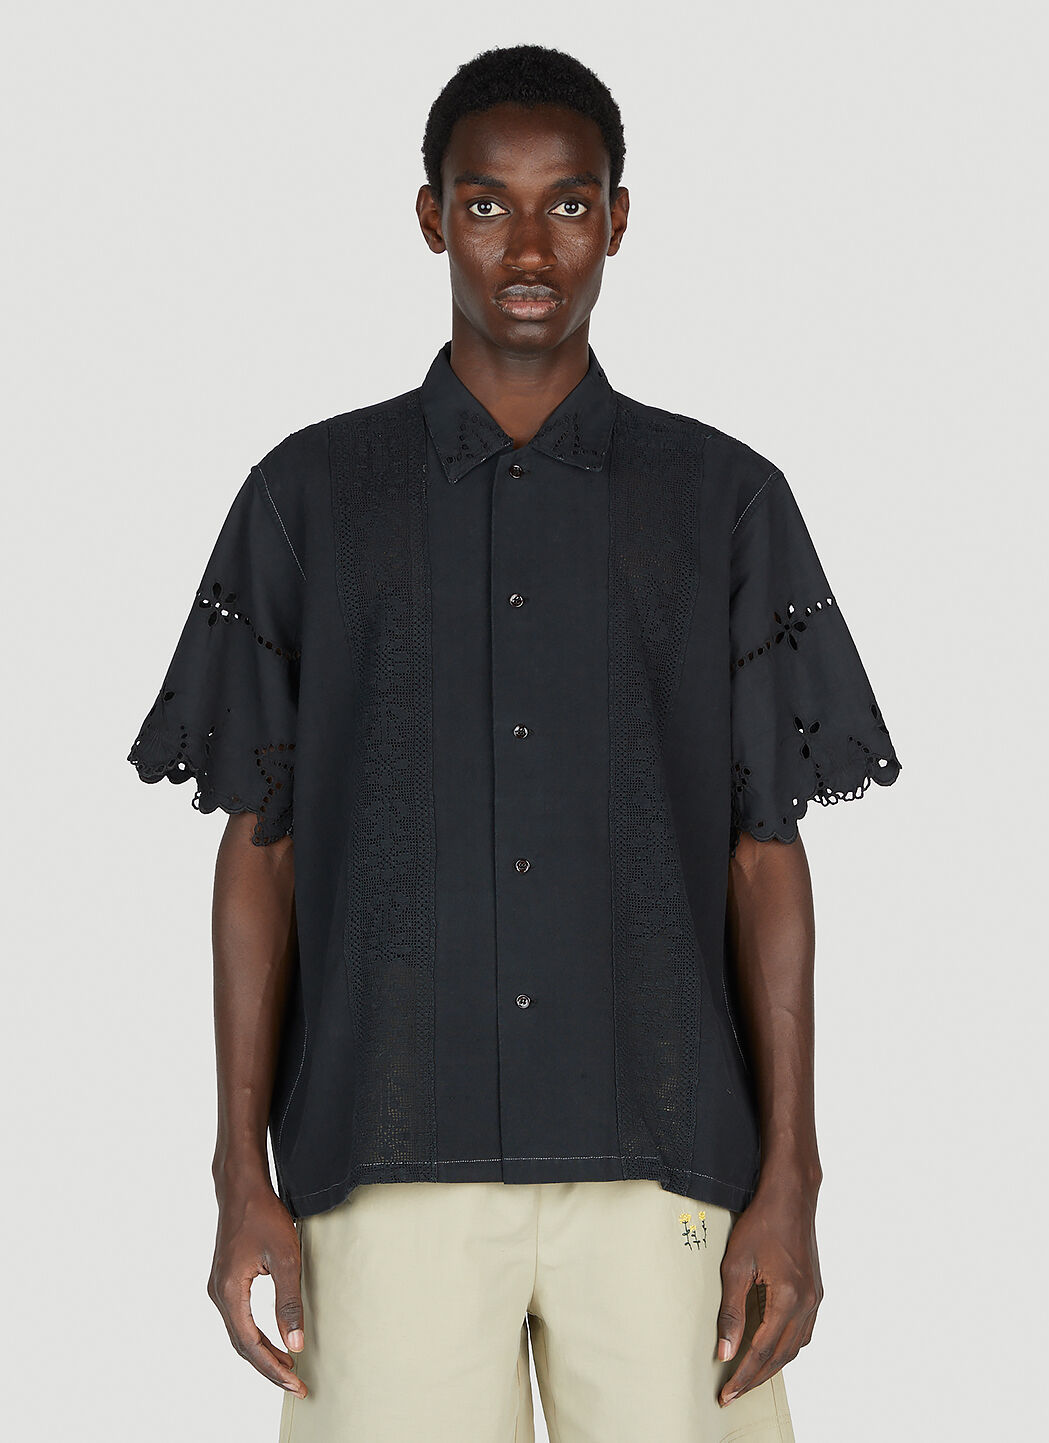 Diomene Embroidered Shirt Black dio0153001